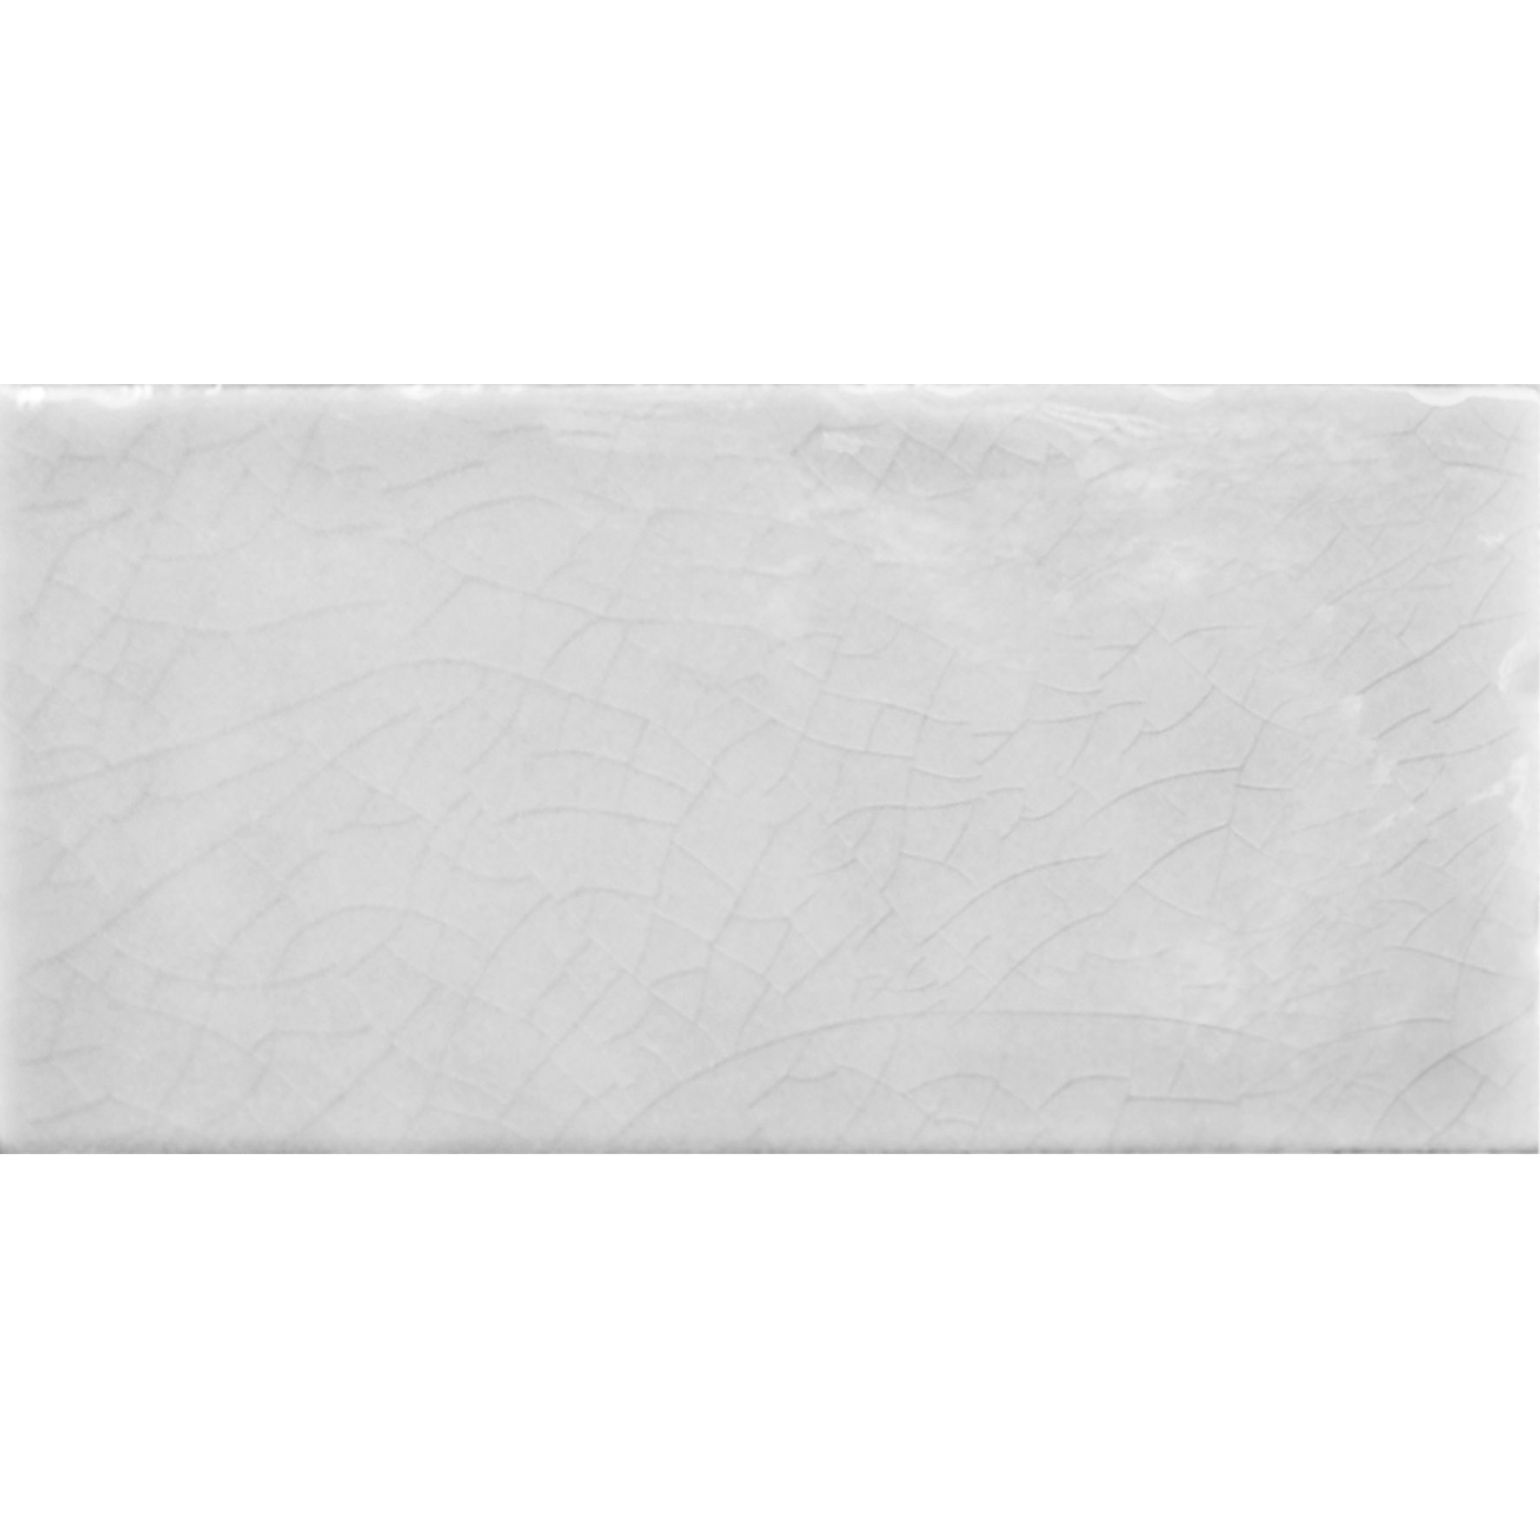 Настенная плитка Cevica Plus Crackle White (Craquele) 7,5x15 см